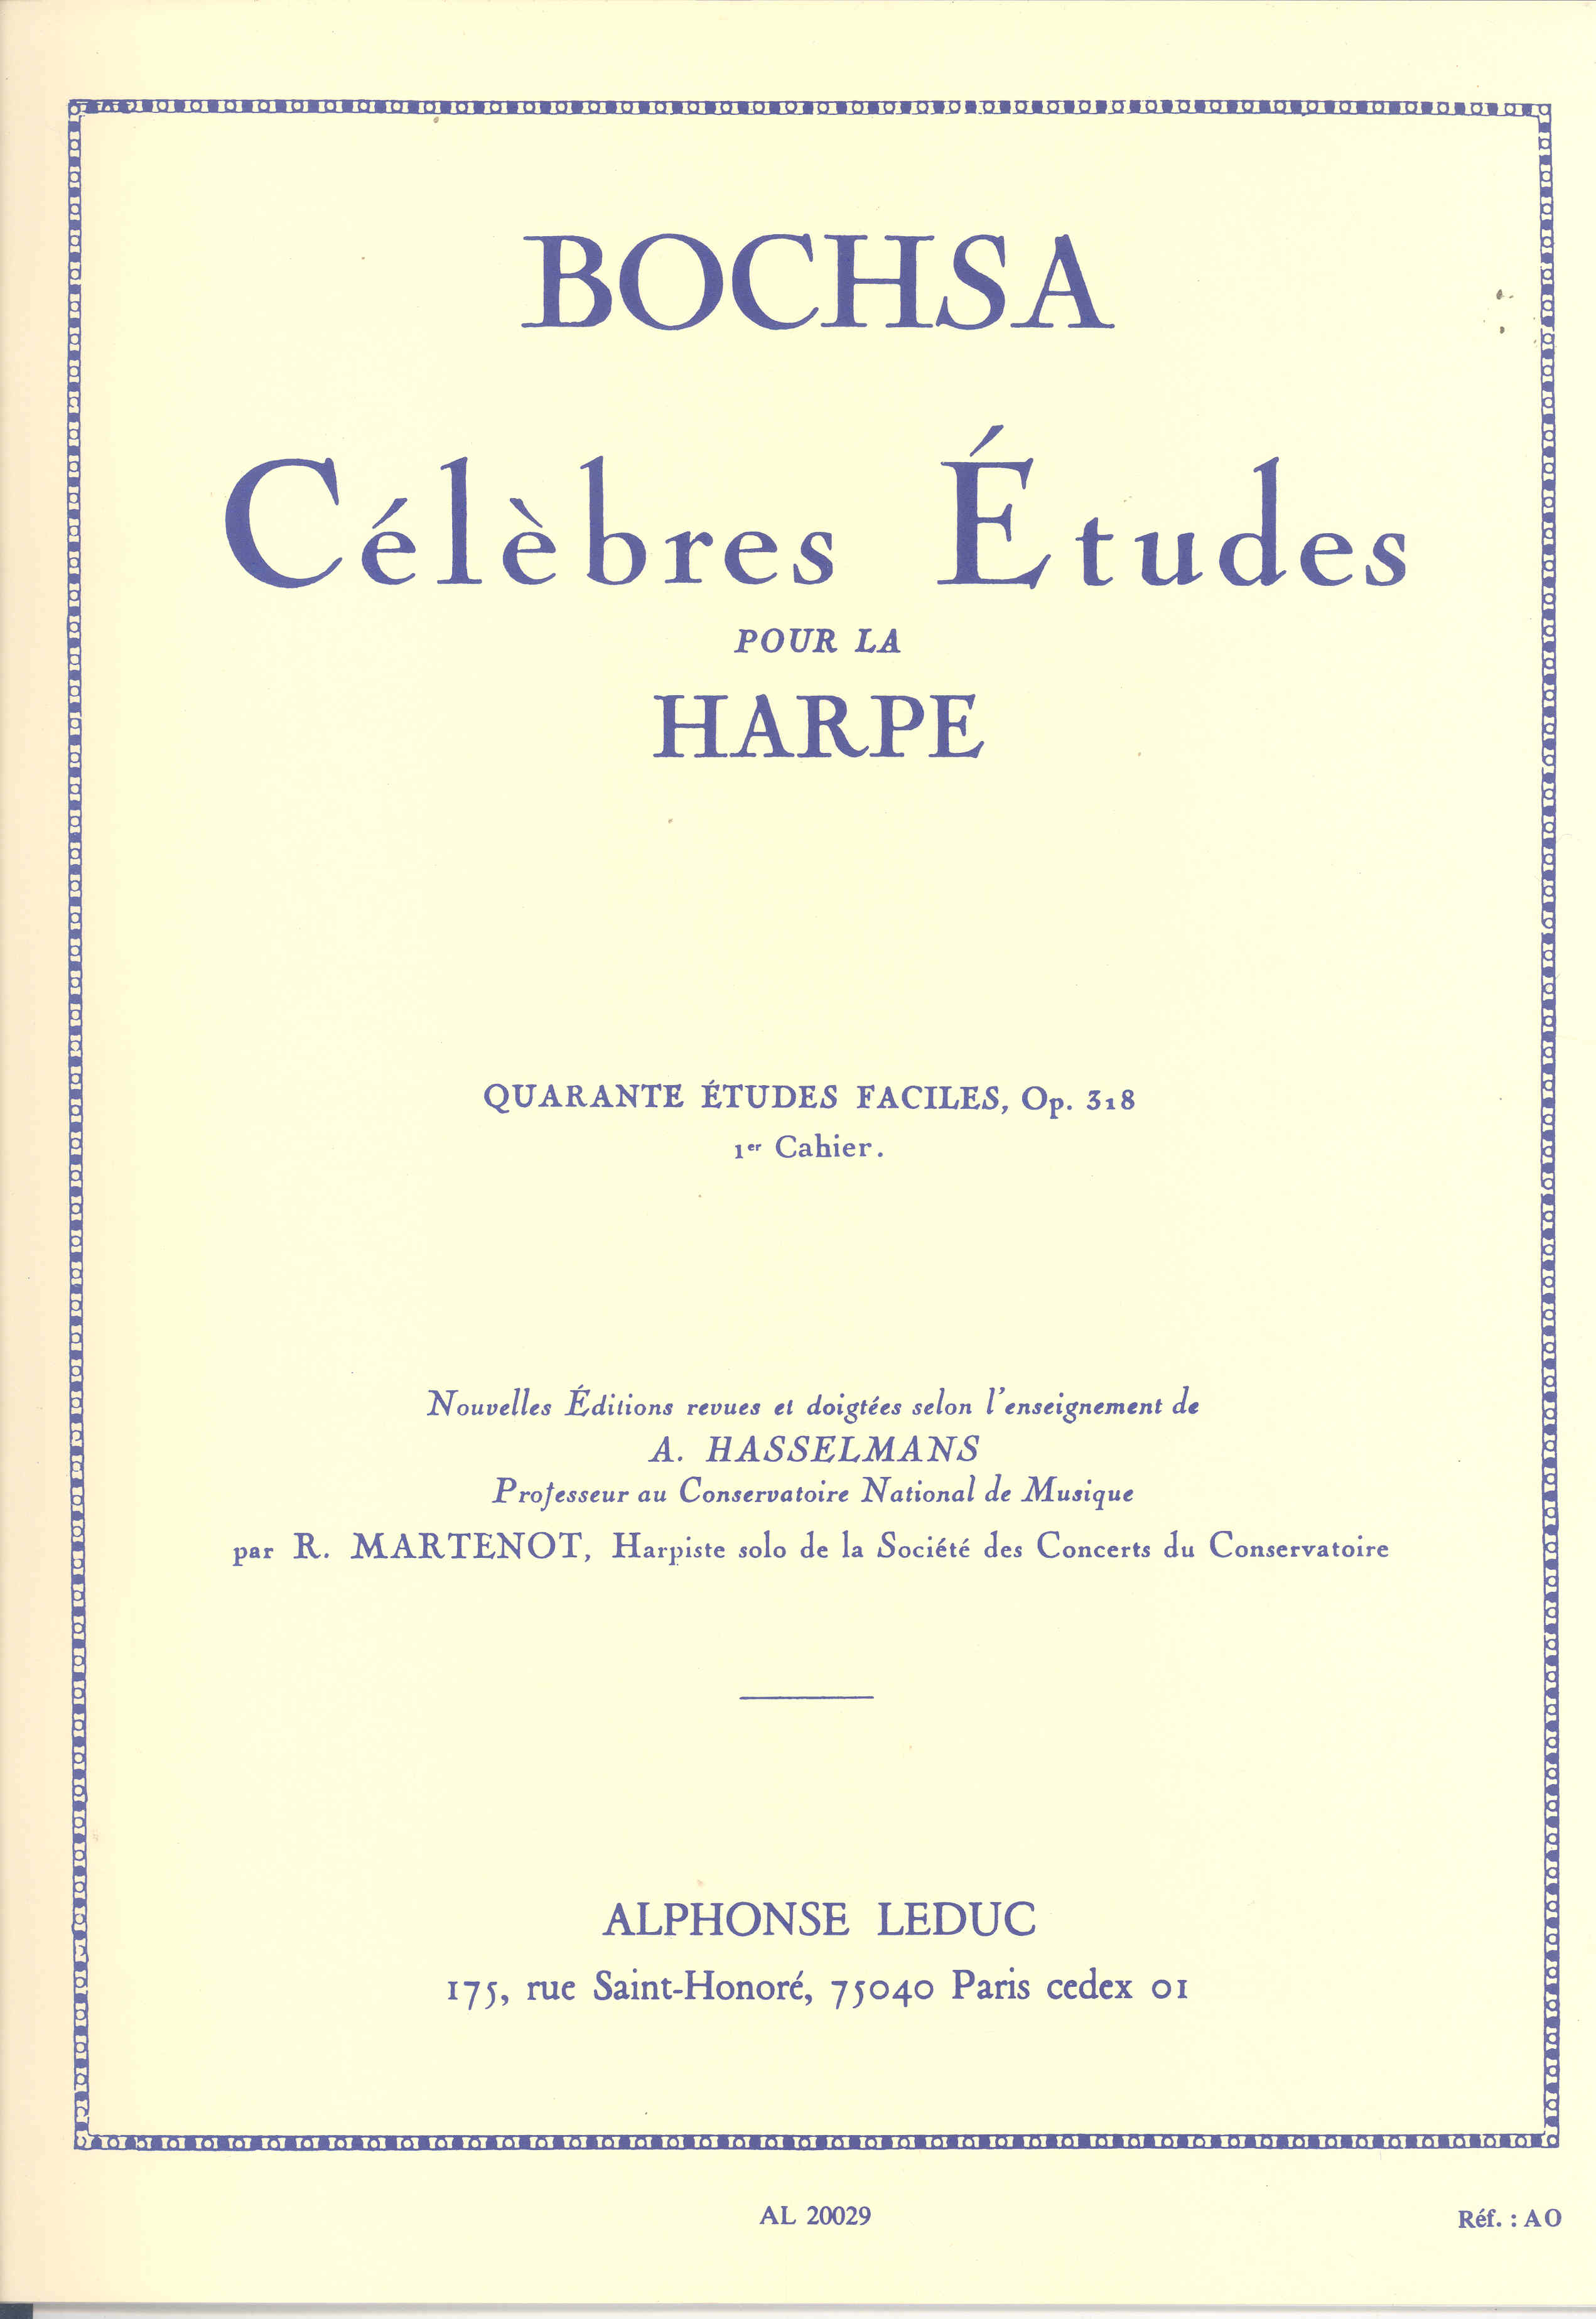 Bochsa 40 Etudes Faciles Op 318 Book 1 Harp Sheet Music Songbook